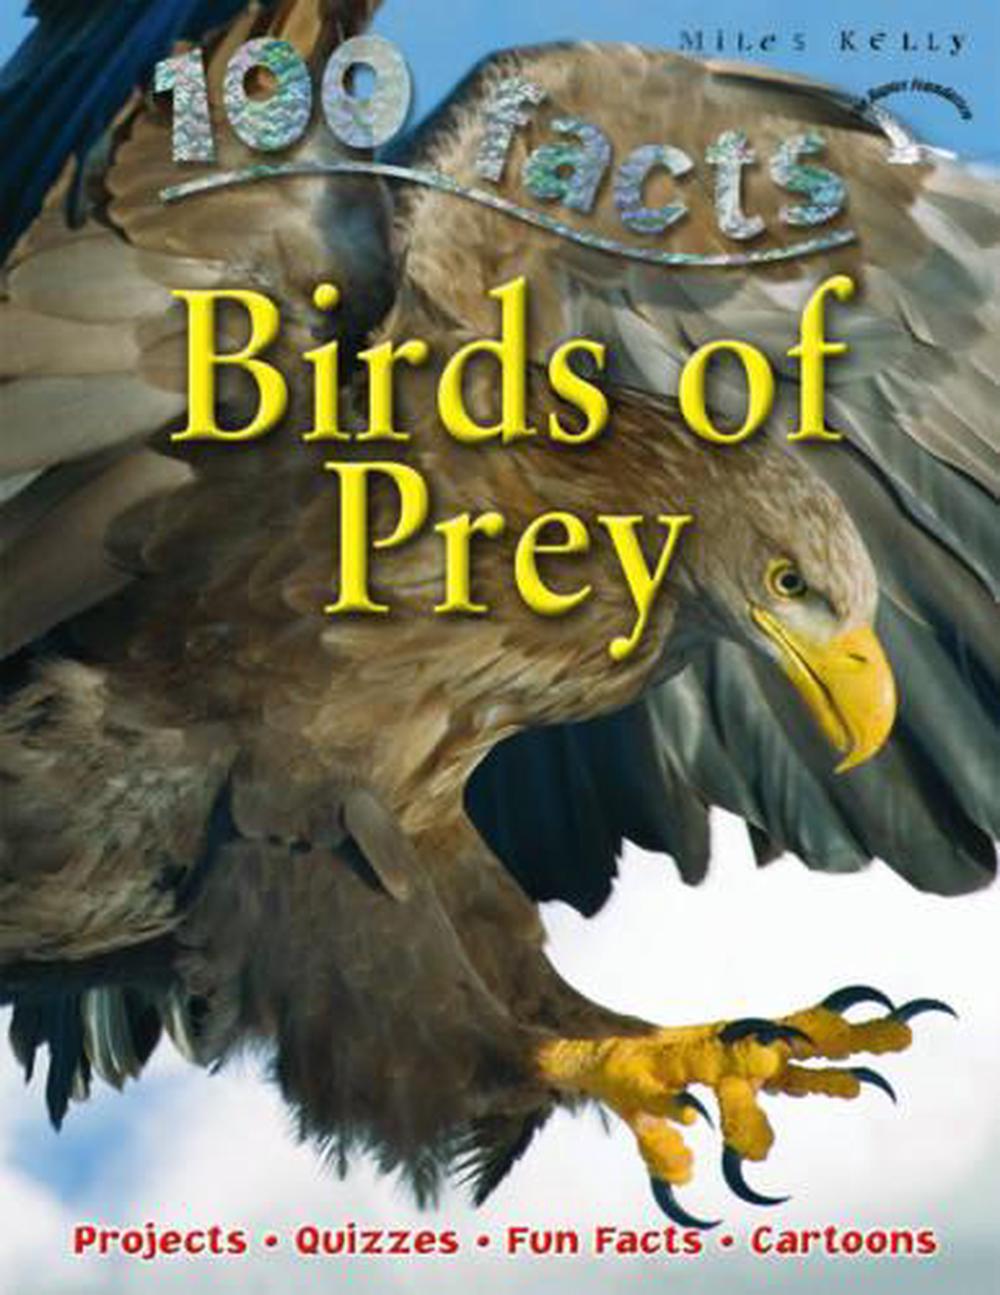 birds of prey book images